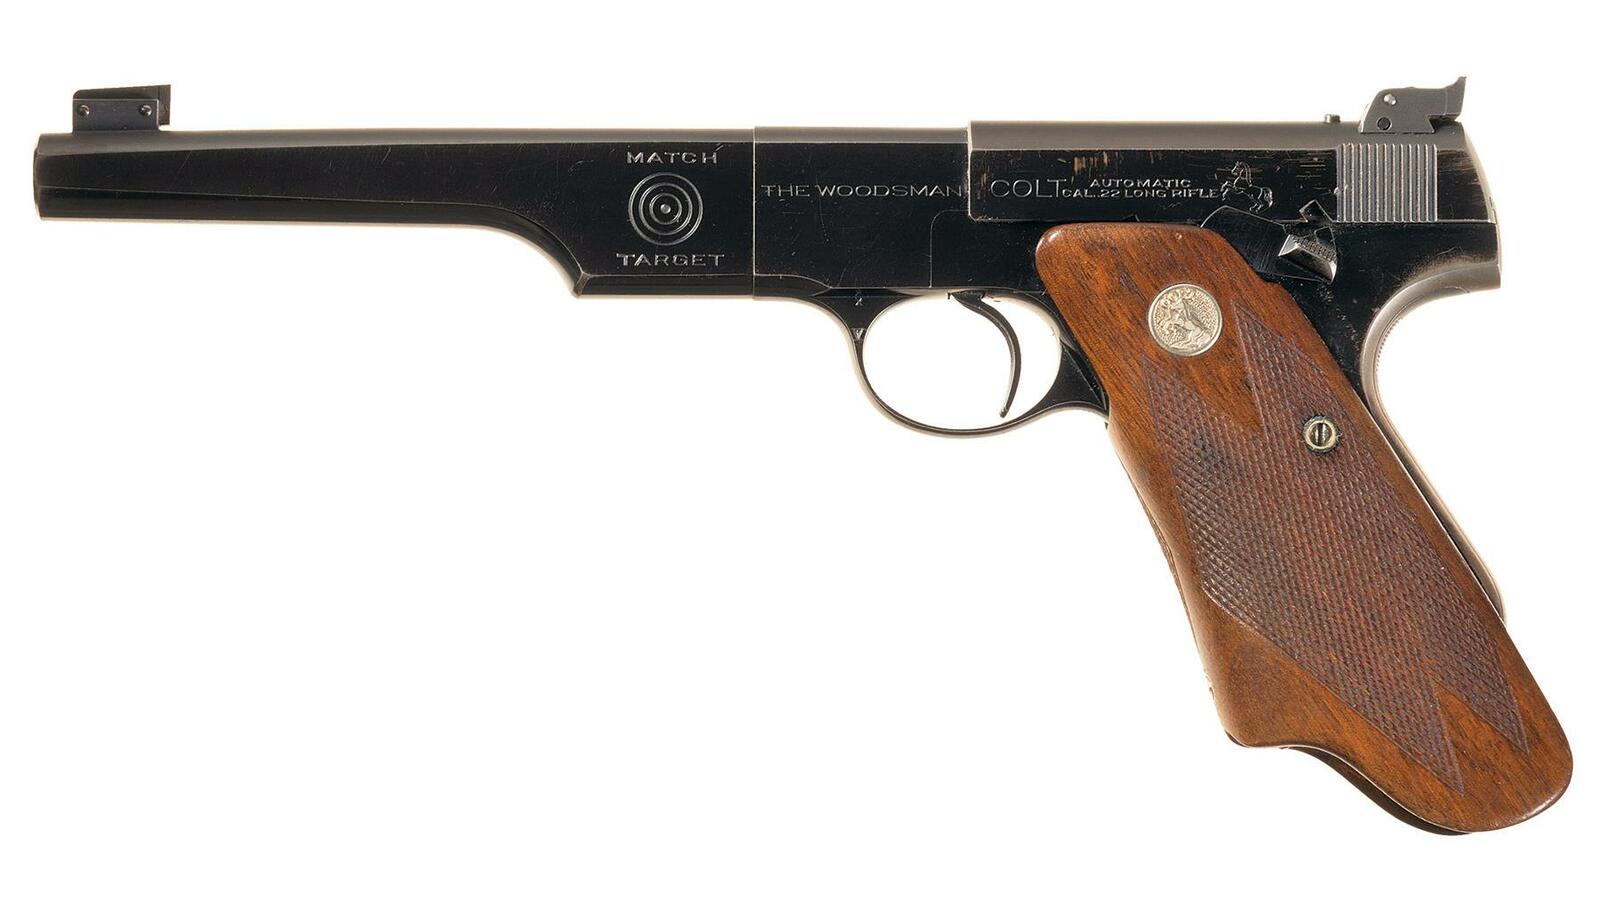 Colt Woodsman Pistol 22 LR.